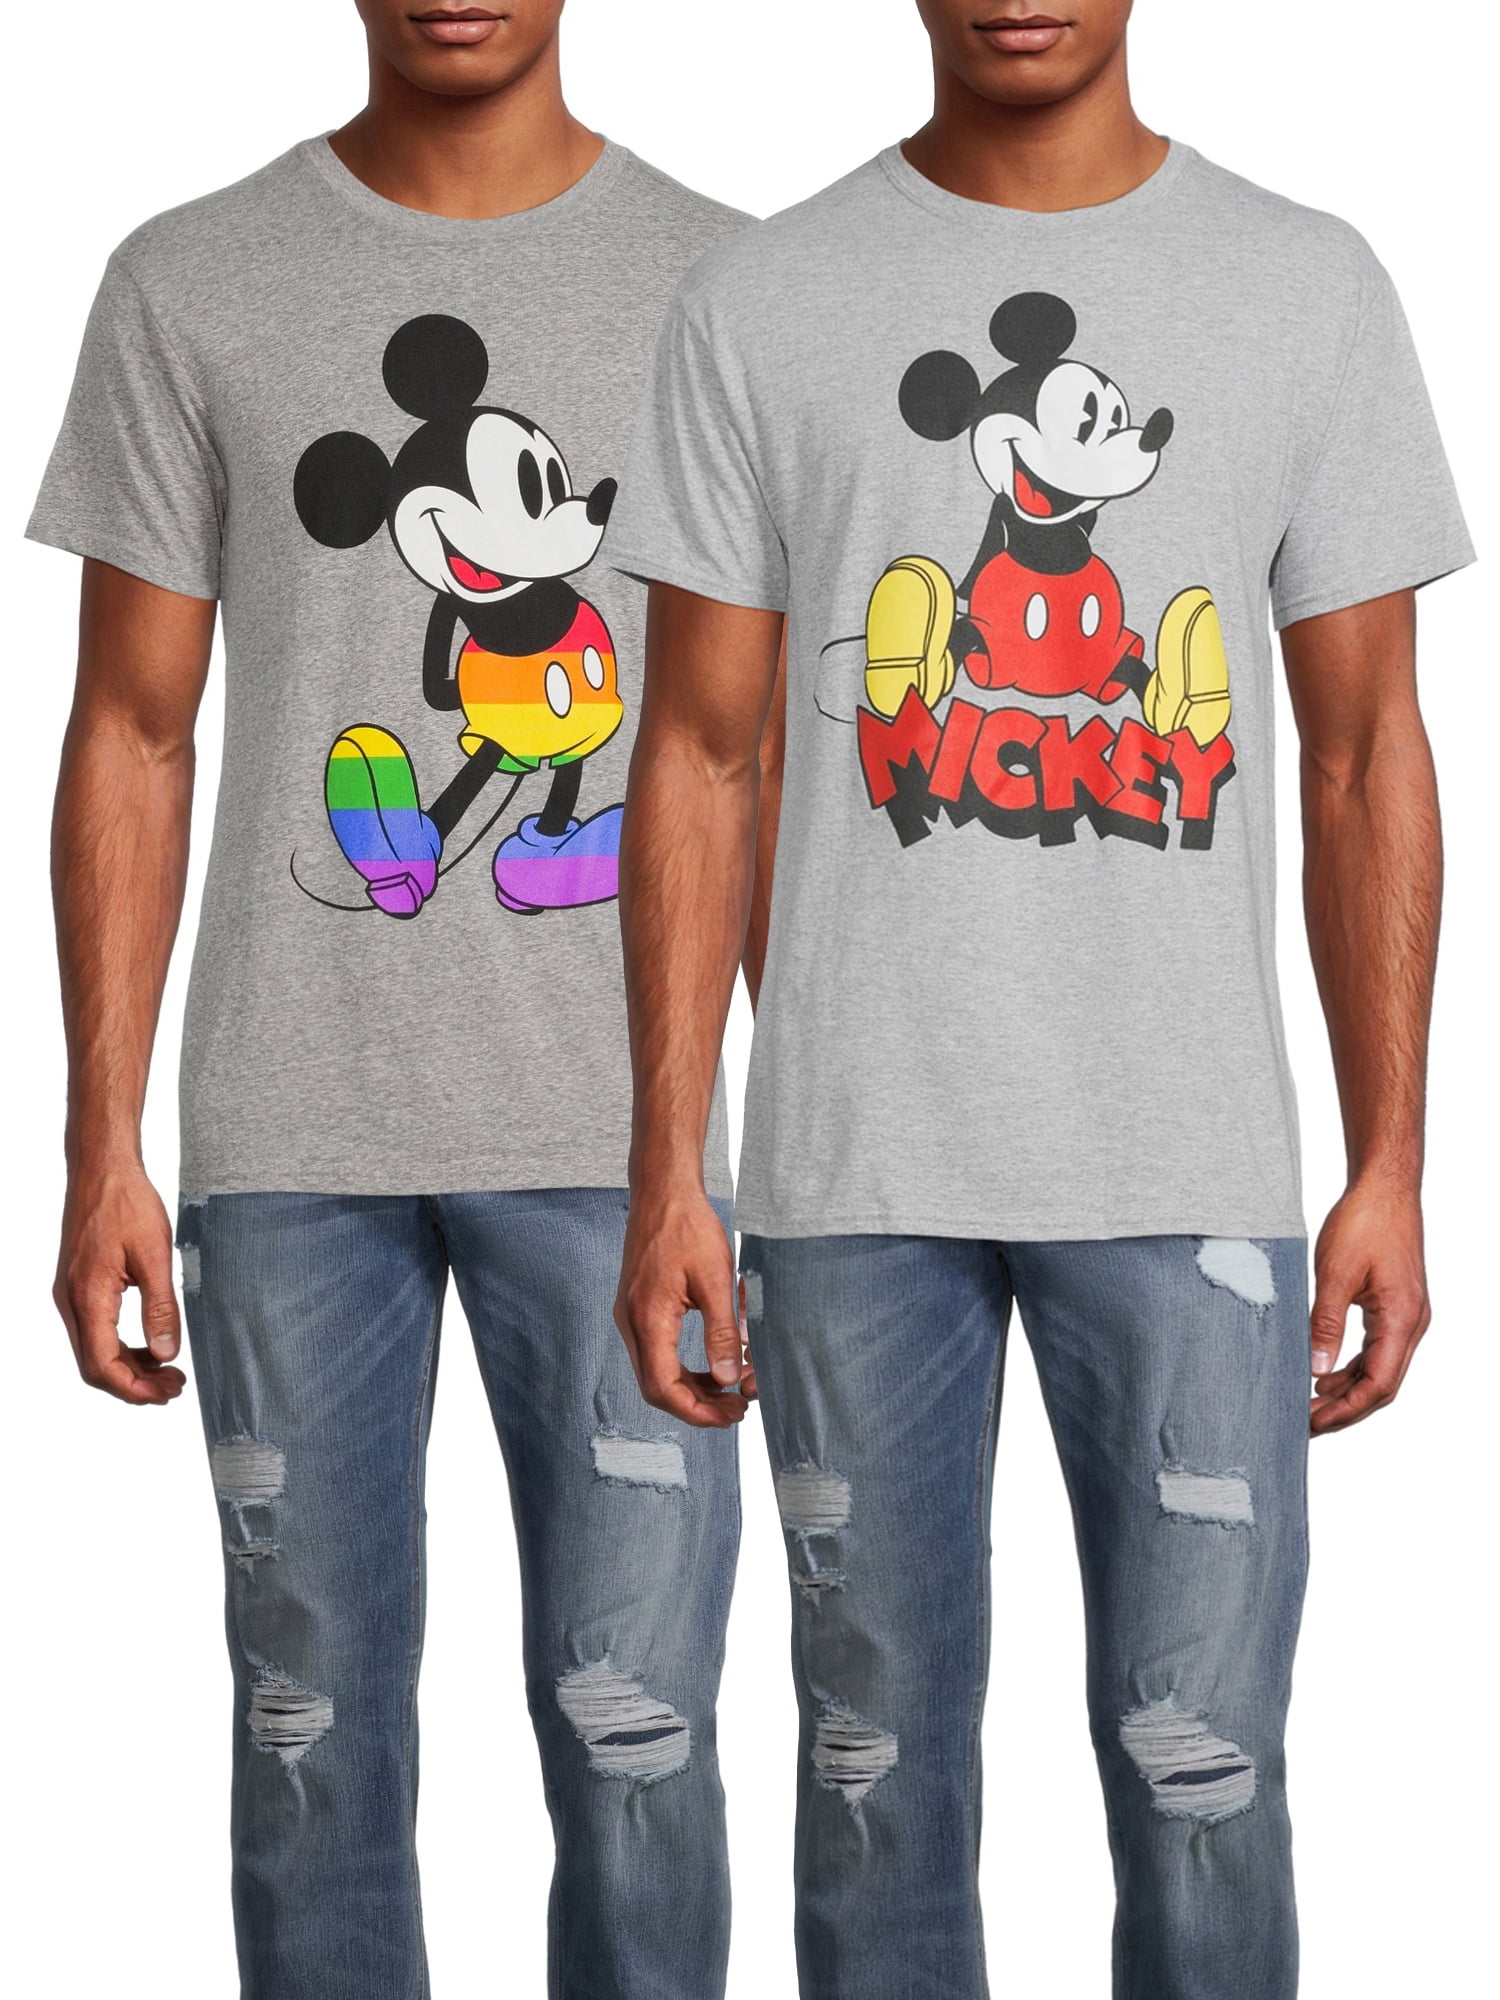 Mickey Mouse Disney Parks Retro Vintage Soft Charcoal Speckle T-Shirt S 2XL 